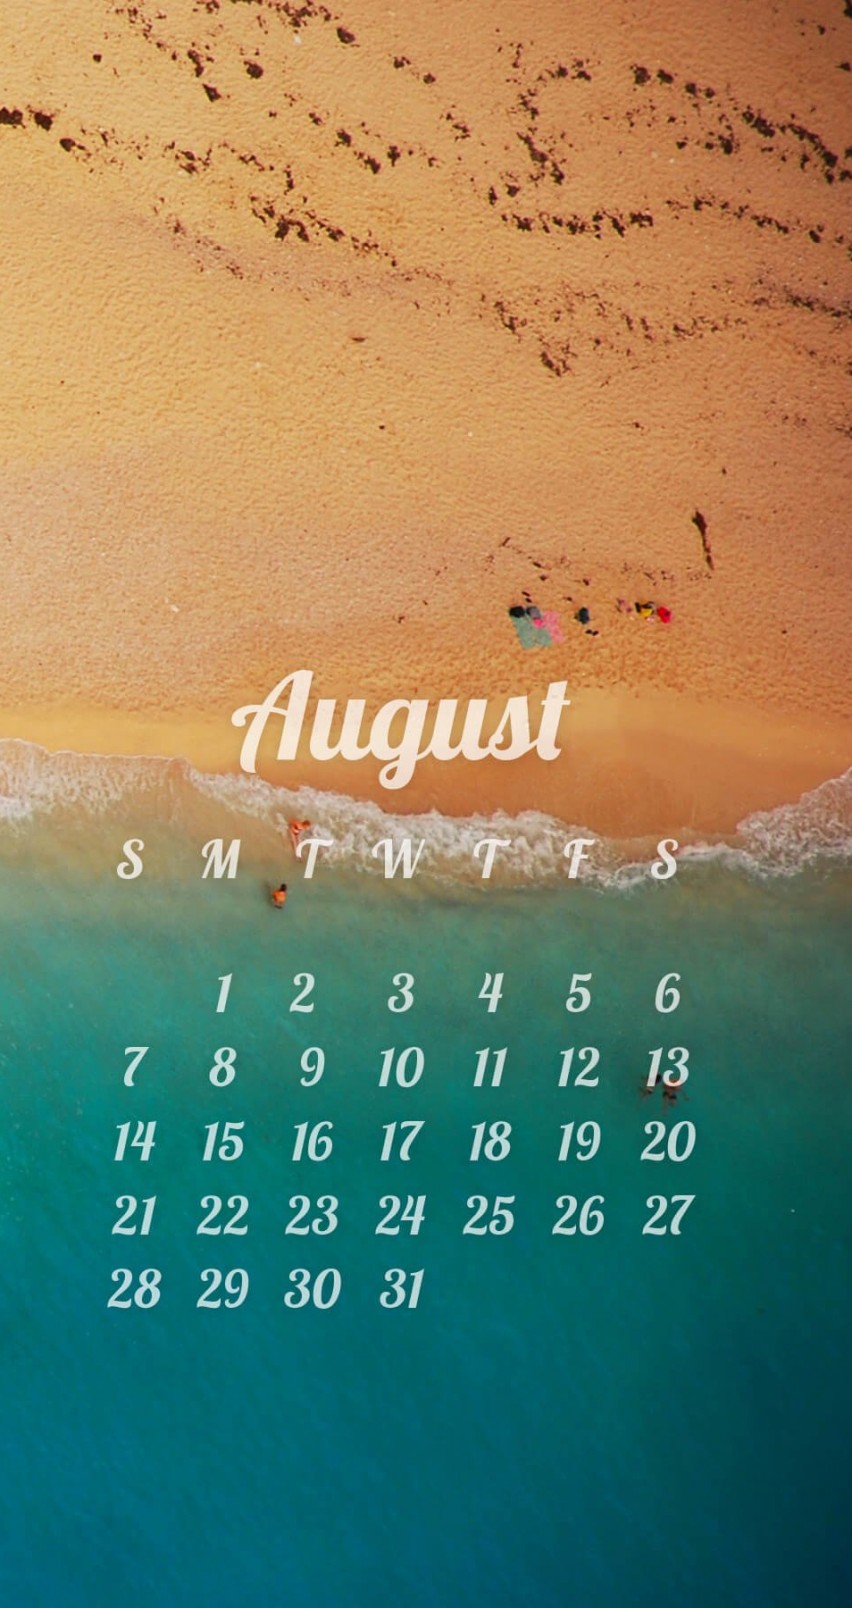 August 2016 Calendar Wallpaper for Apple iPhone 6 / 6s